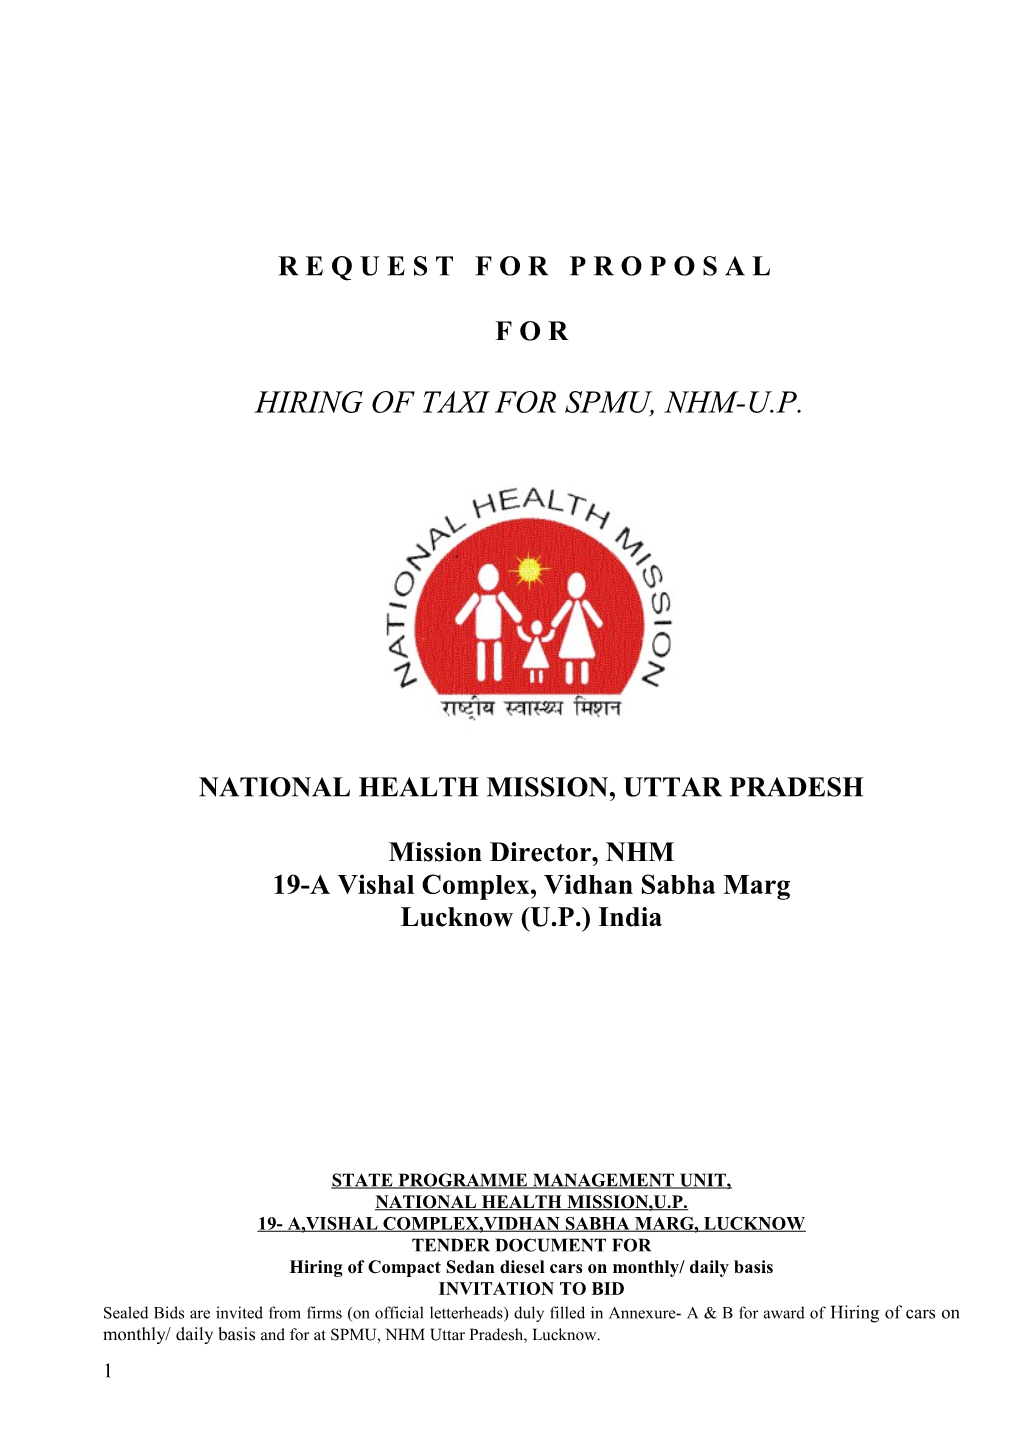 National Health Mission, Uttar Pradesh